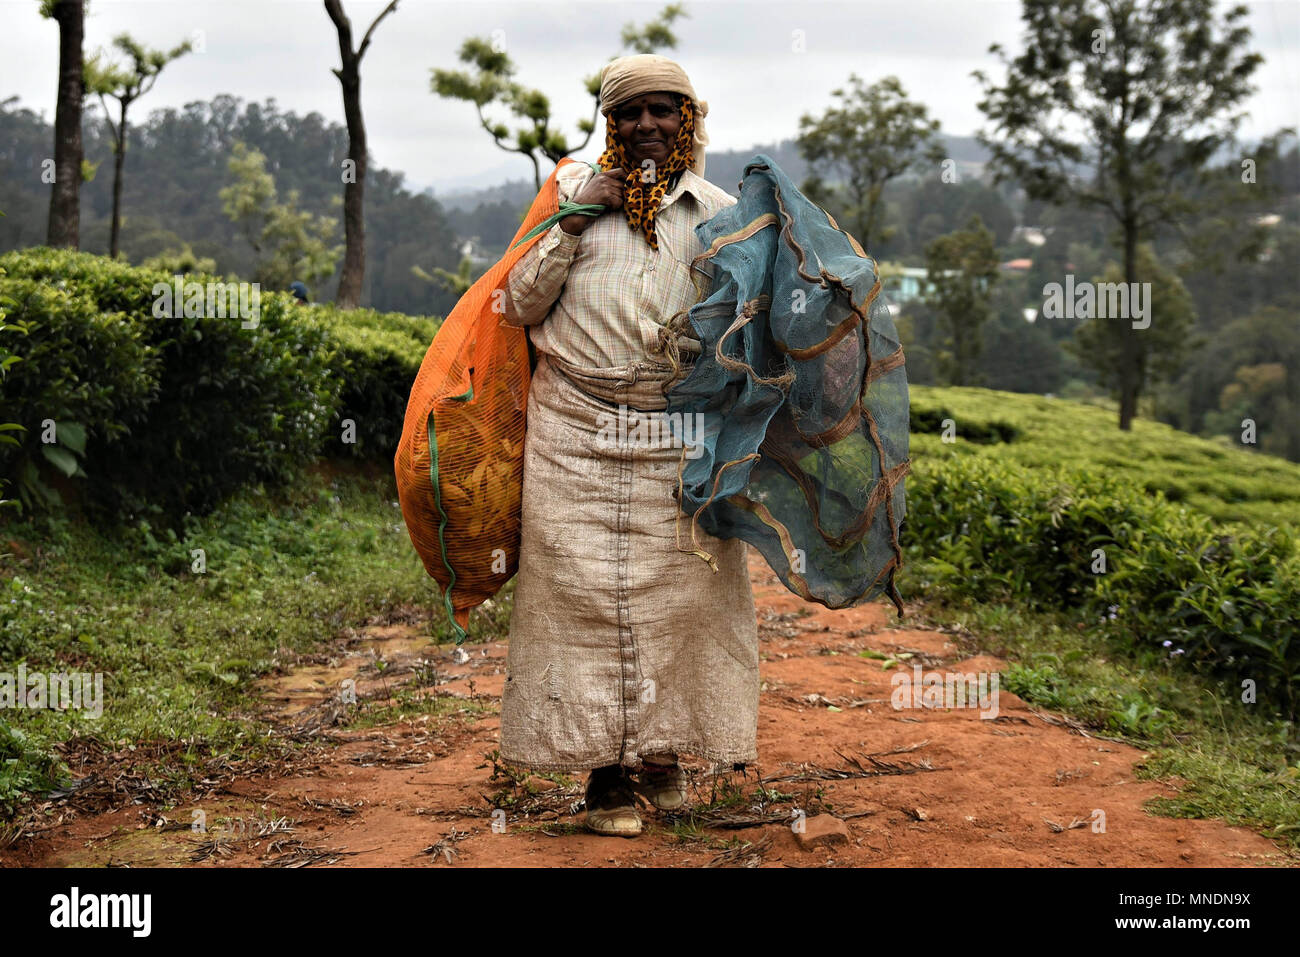 Kaffee picker bei der Arbeit, Coonoor, Nilgiri Berge, Tamil Nadu, Indien Foto © jacopo Emma/Sintesi/Alamy Stock Foto Stockfoto